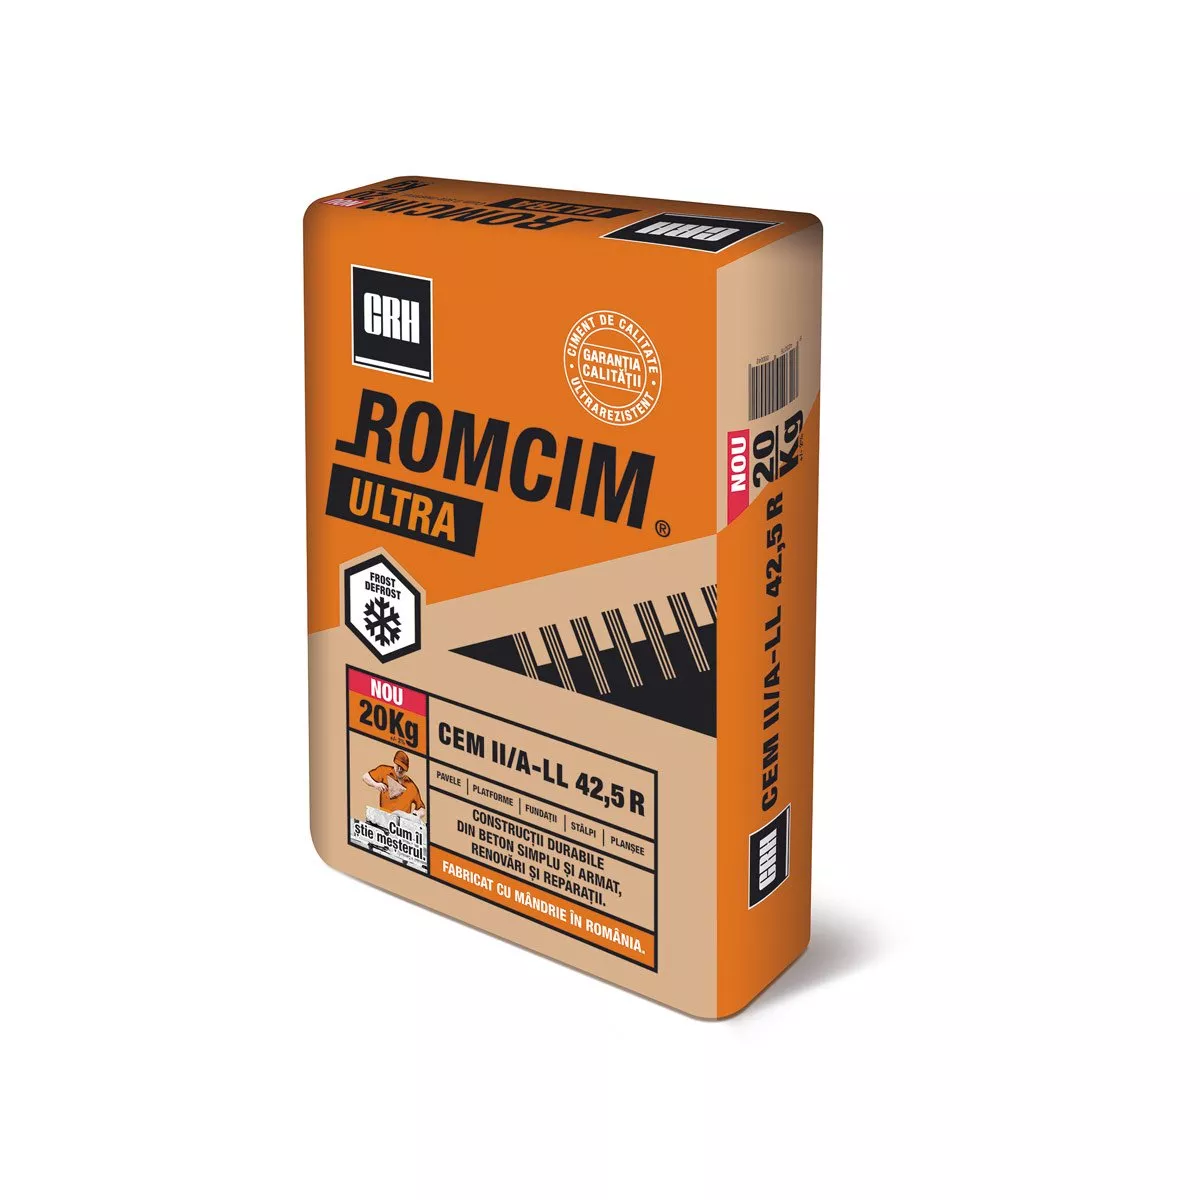 Ciment Romcim Ultra 20 kg/sac